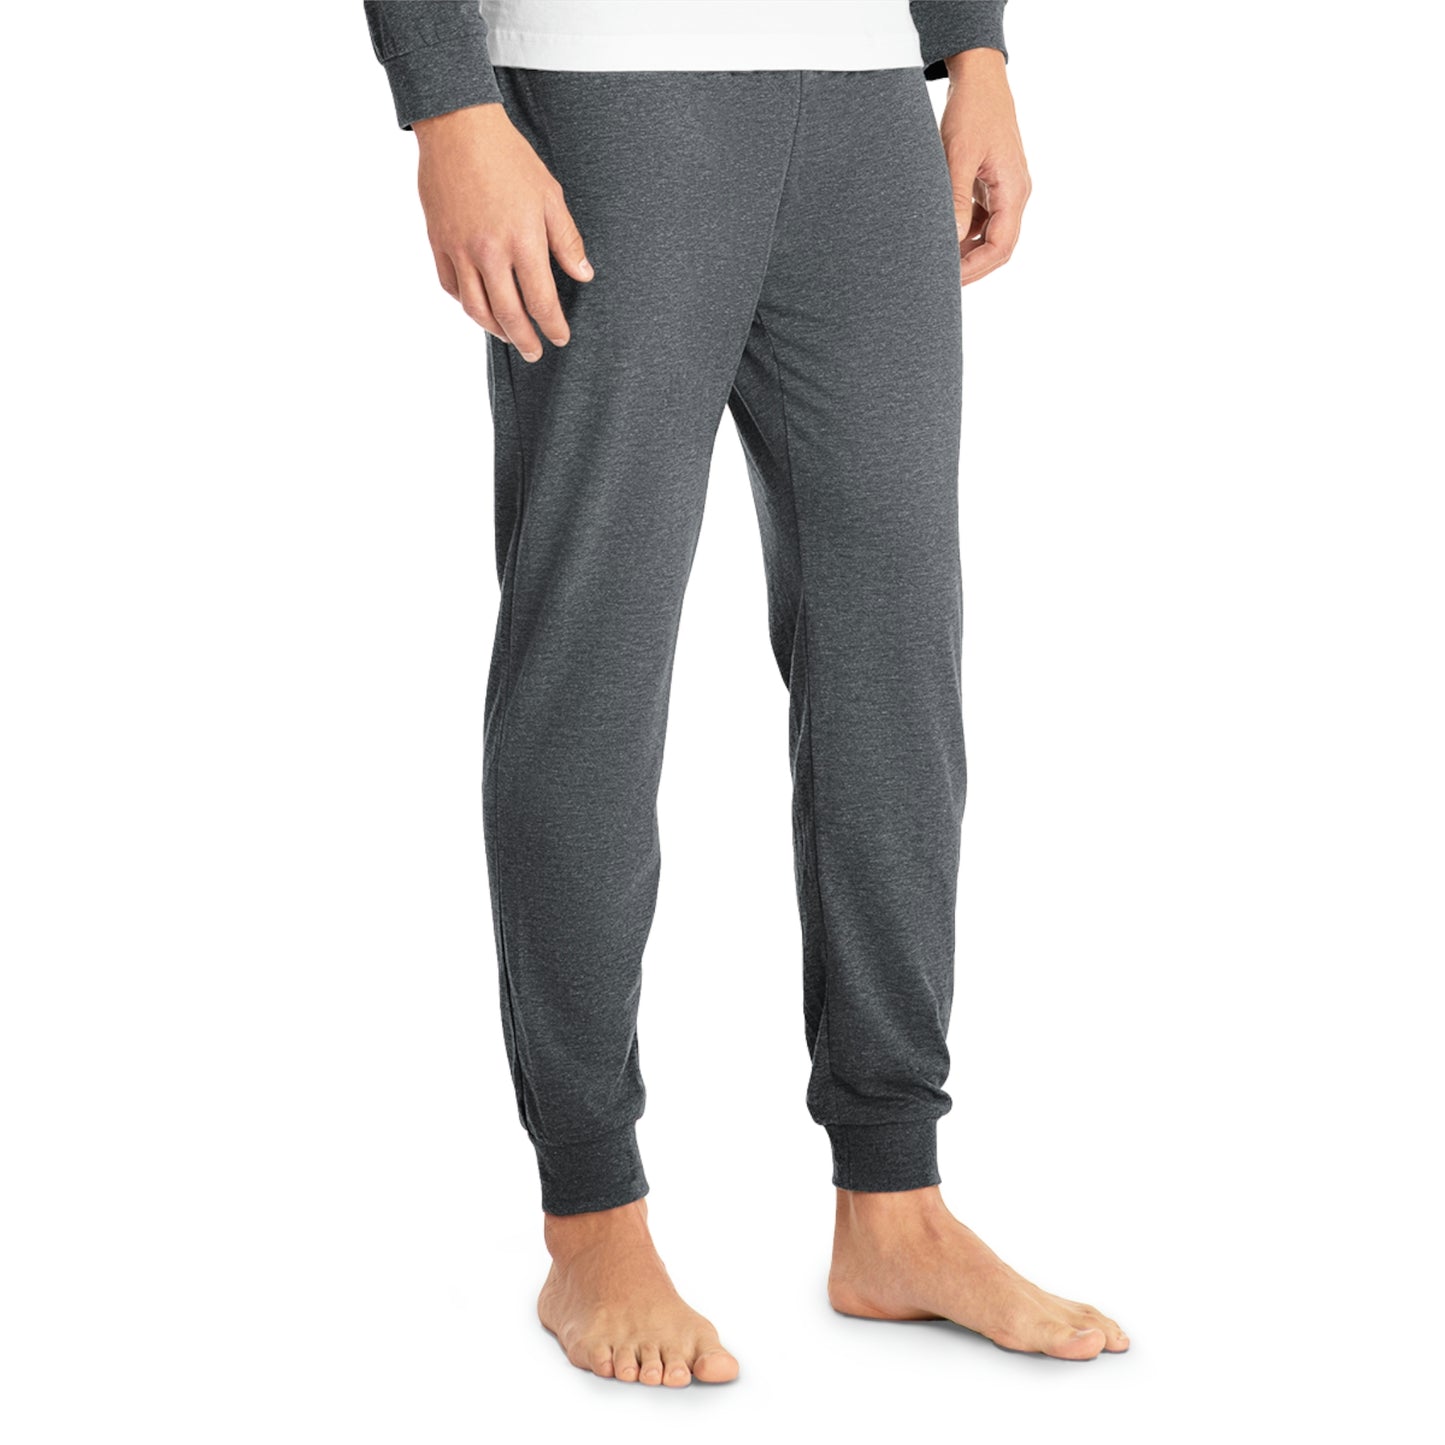 Men's Pajama Set